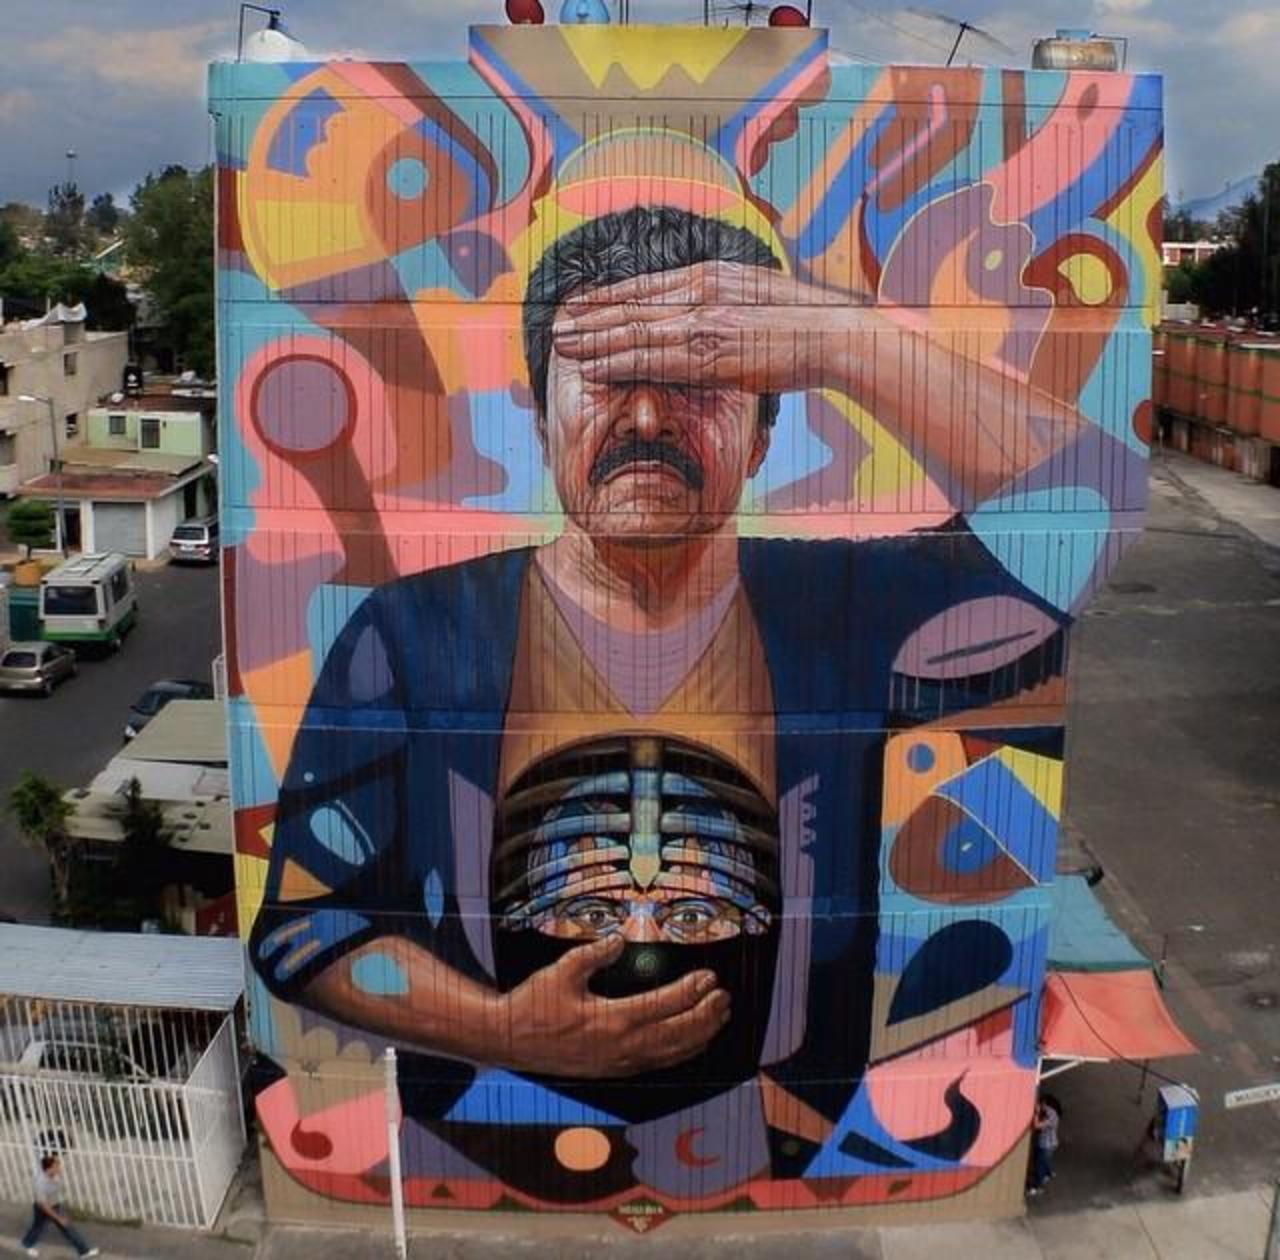 Large scale Street Art by the artist Daniel Cortez 

#art #mural #graffiti #streetart http://t.co/rWBZvmWj4p